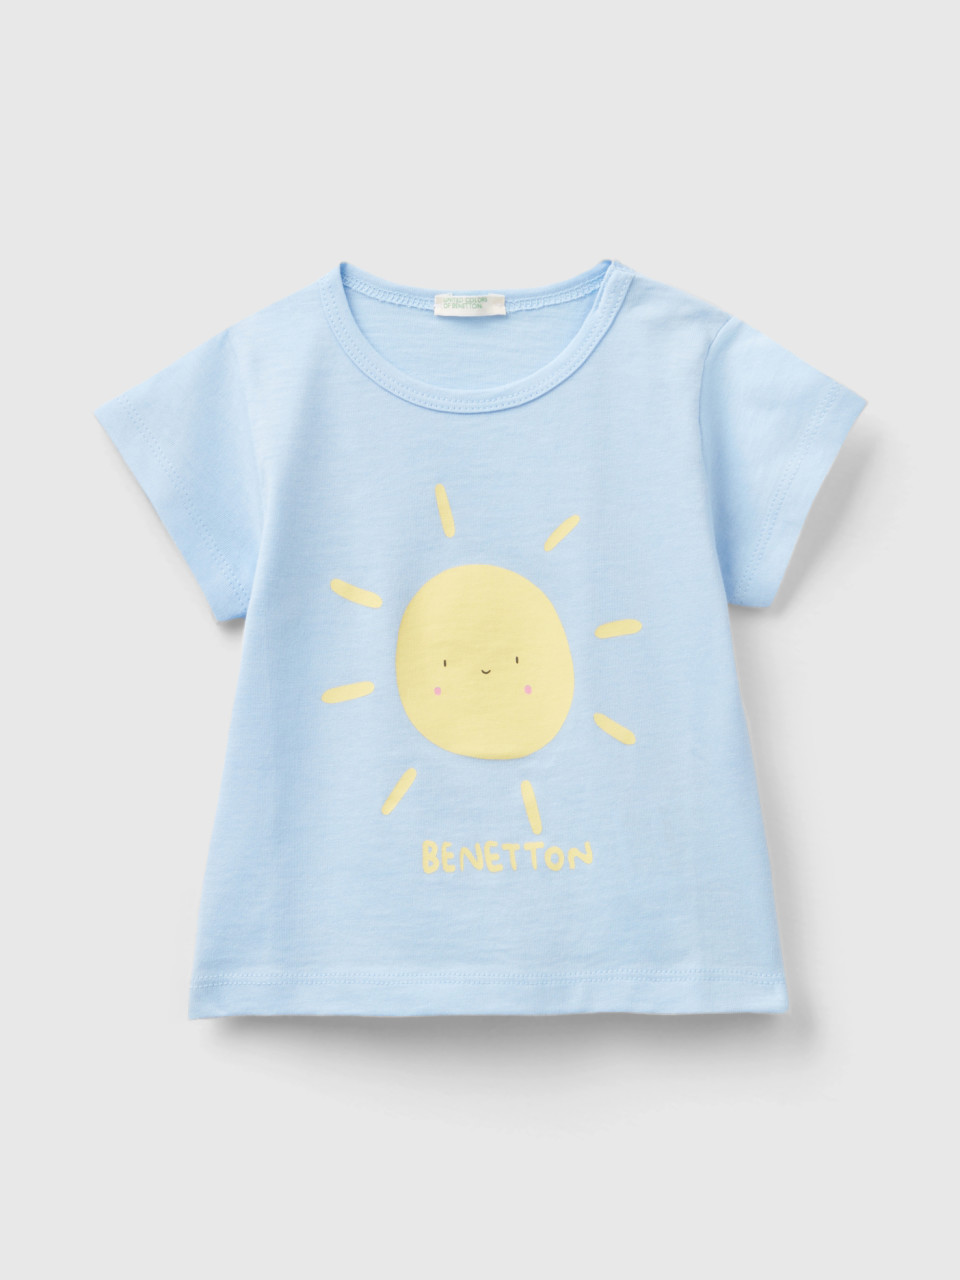 Benetton, Organic Cotton T-shirt With Print, Sky Blue, Kids